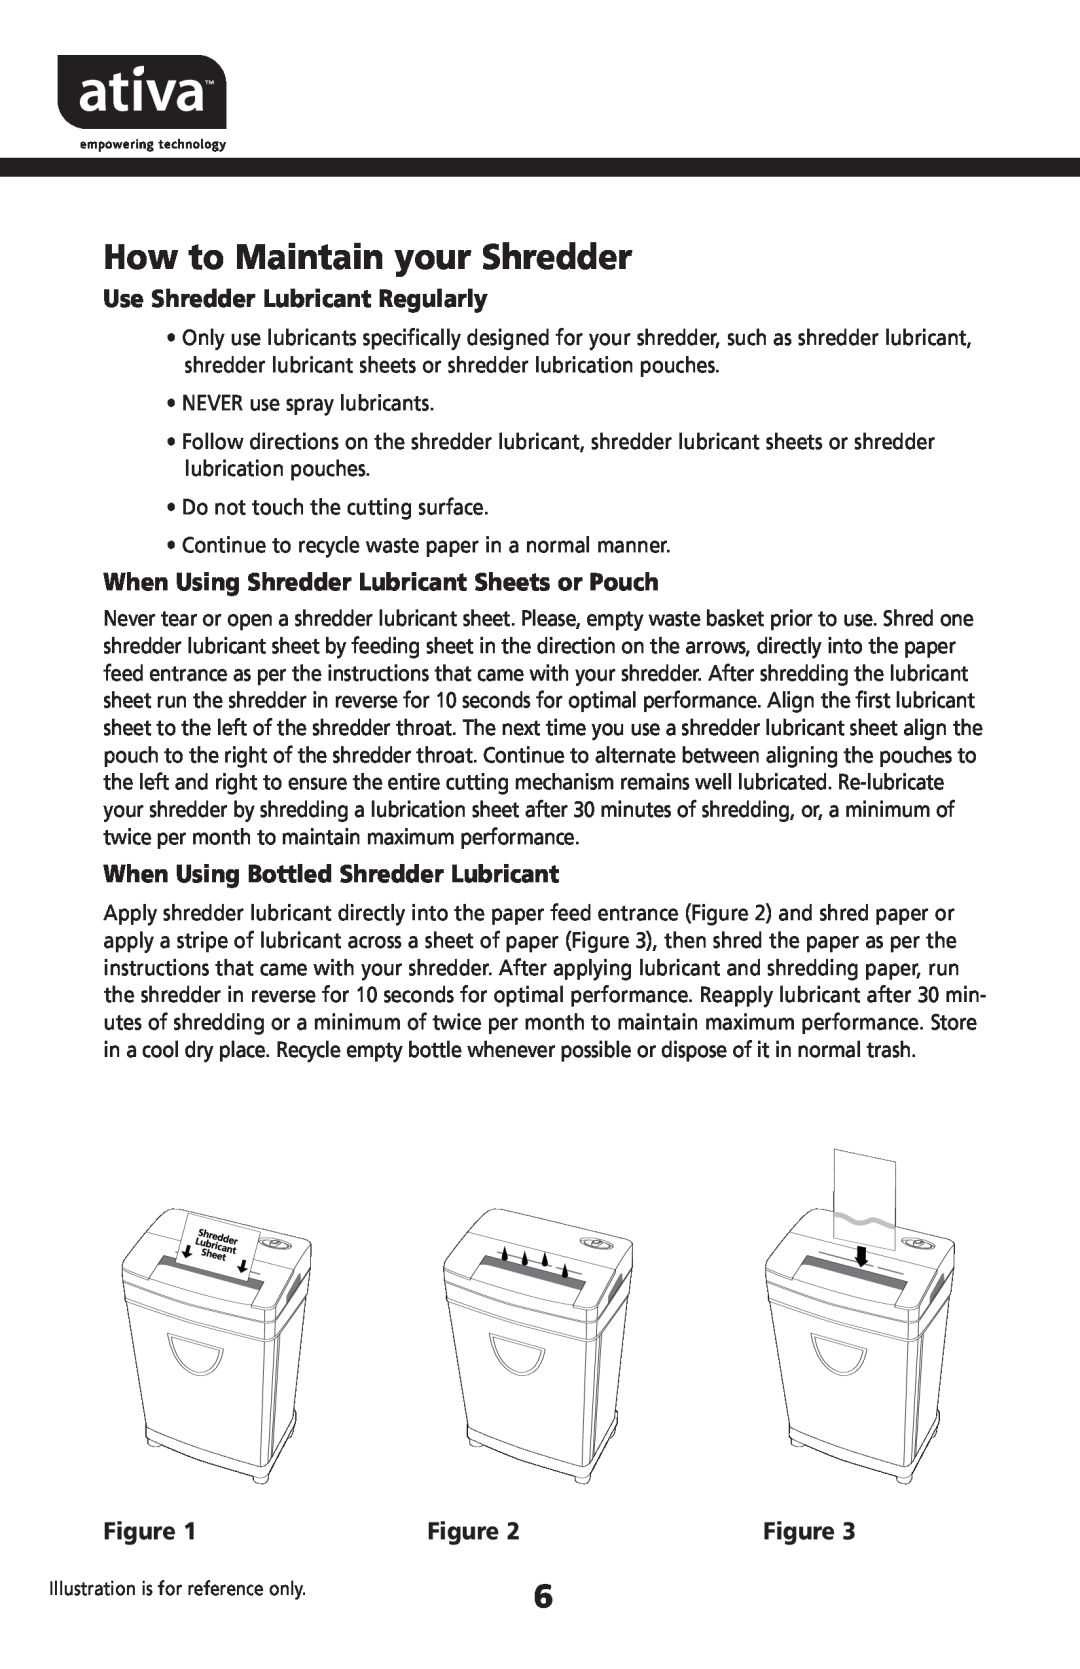 Ativa DSD160D manual How to Maintain your Shredder, Use Shredder Lubricant Regularly, When Using Bottled Shredder Lubricant 